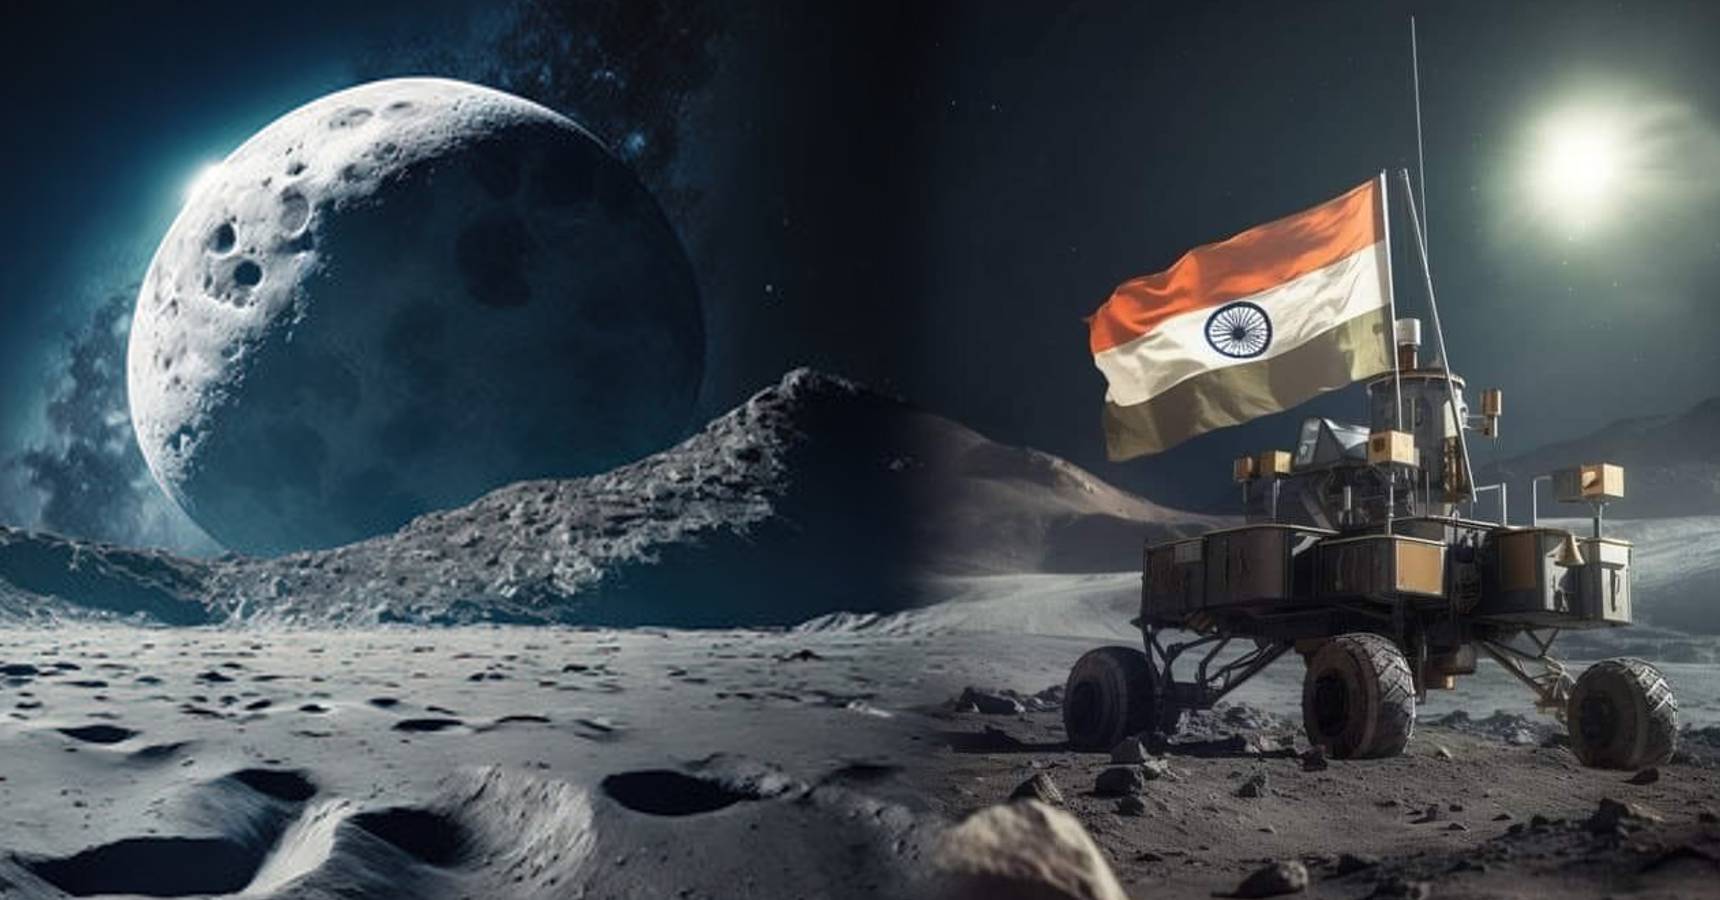 Why is Chandrayaan's lander named "Vikram"